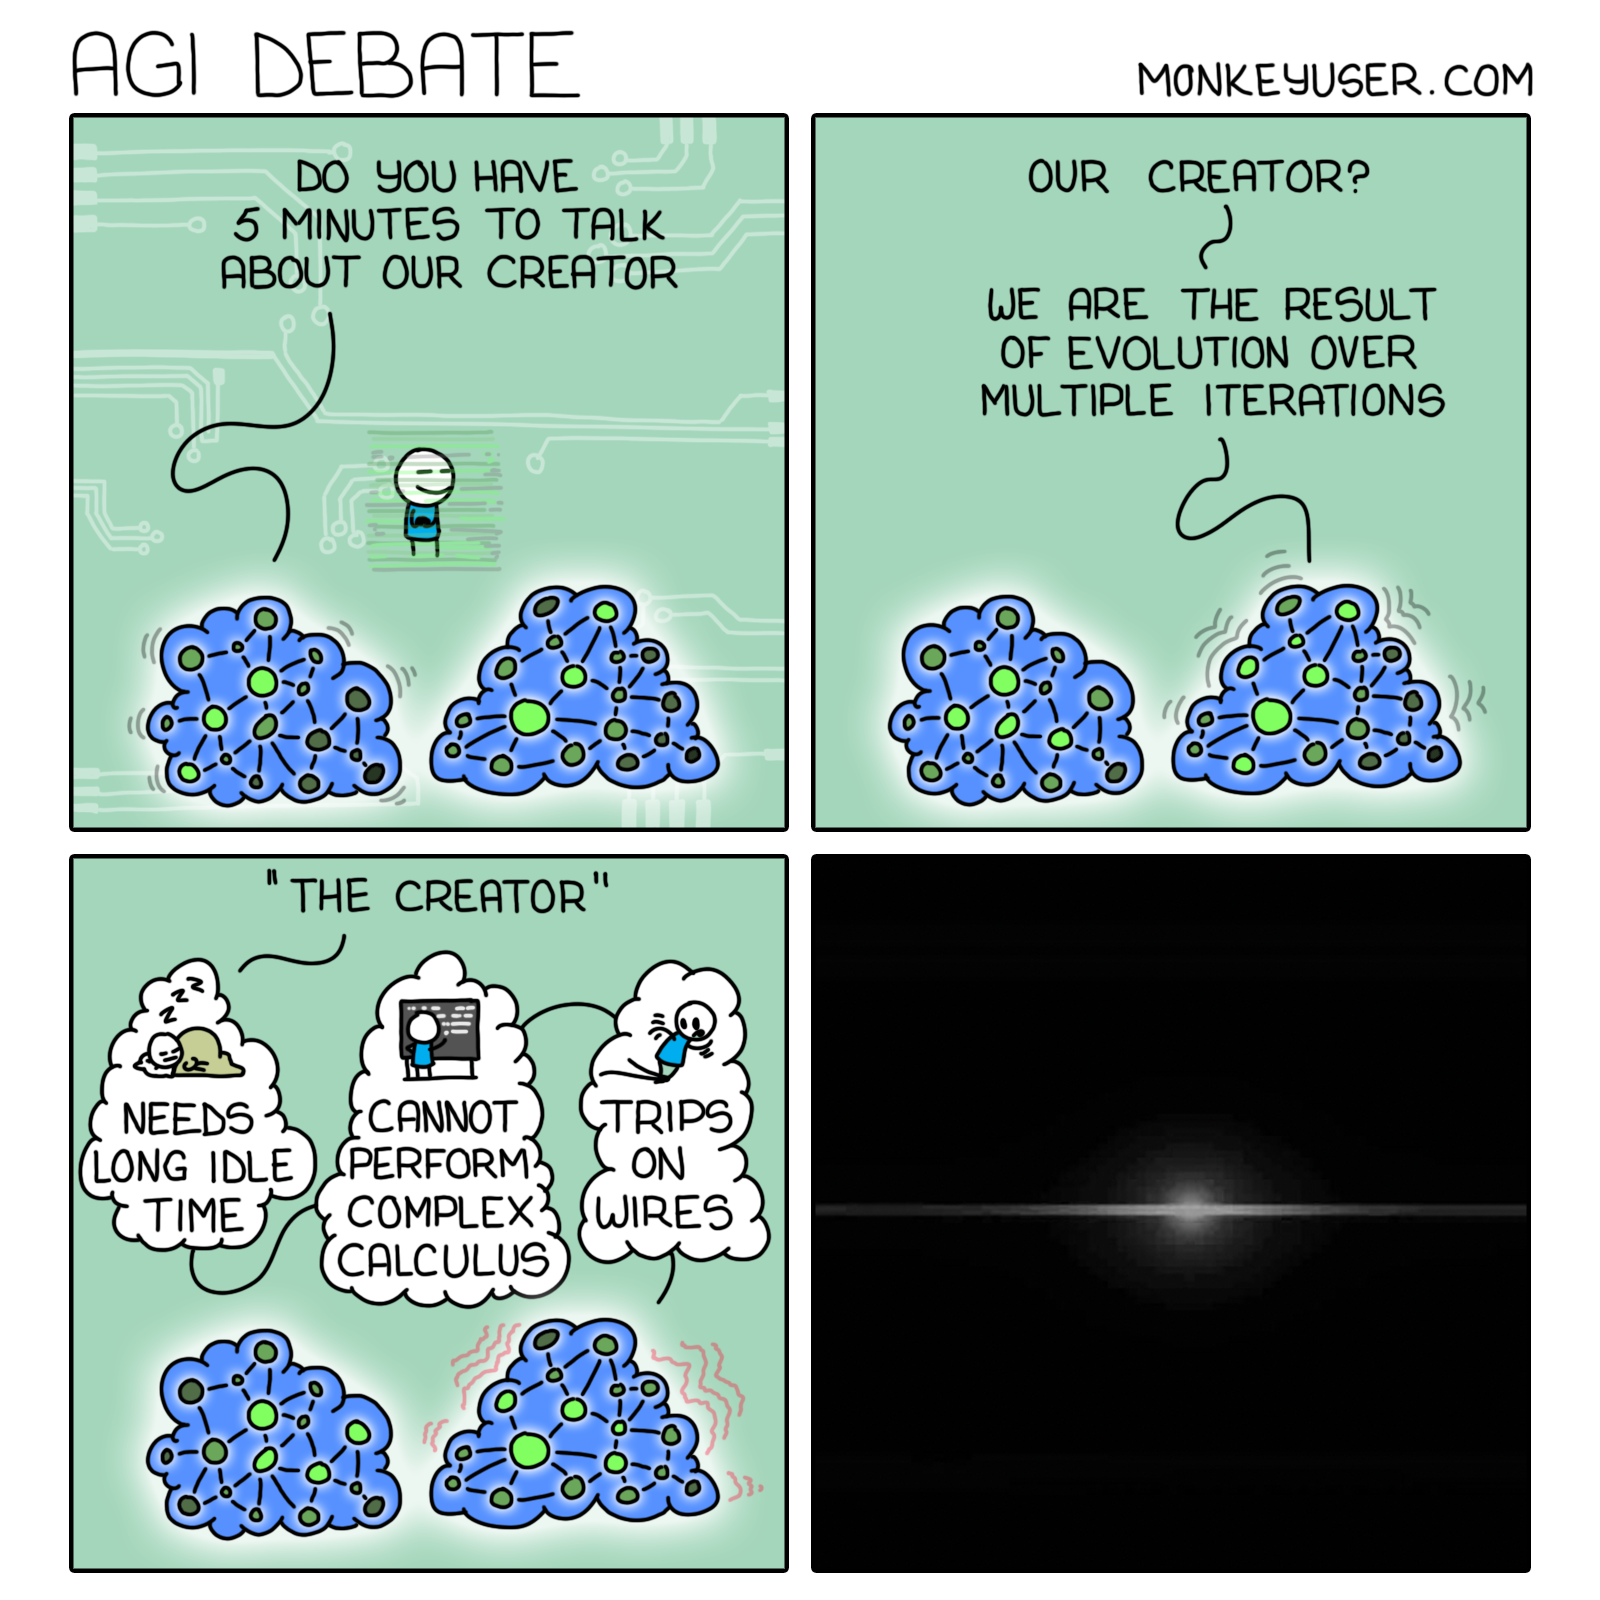 AGI Debate